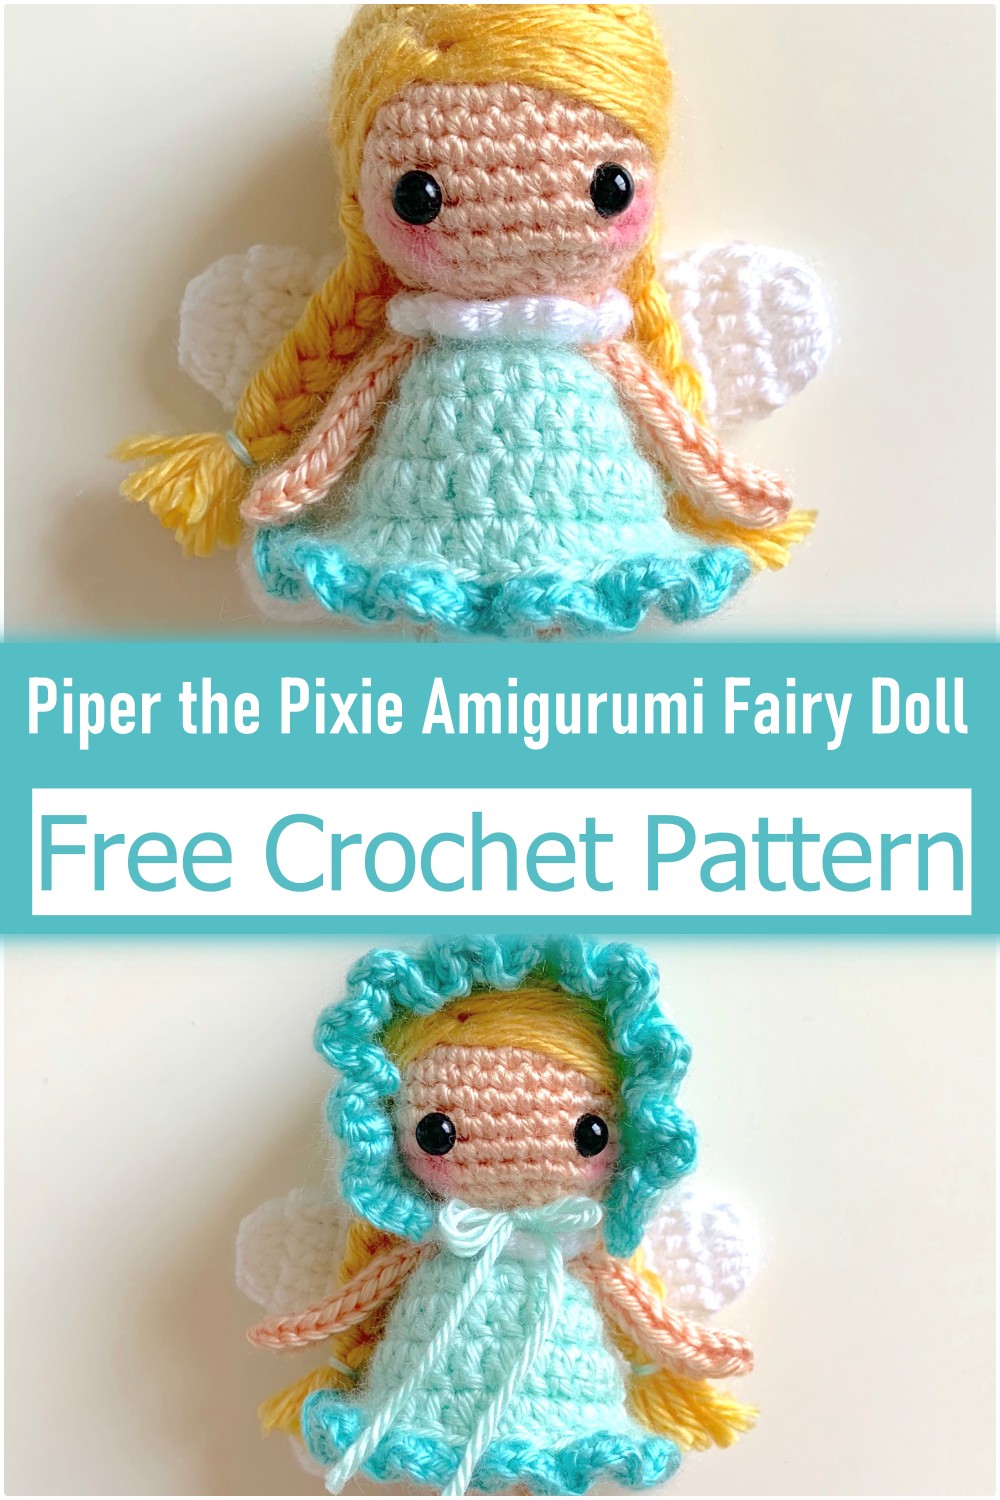 Piper the Pixie Amigurumi Fairy Doll